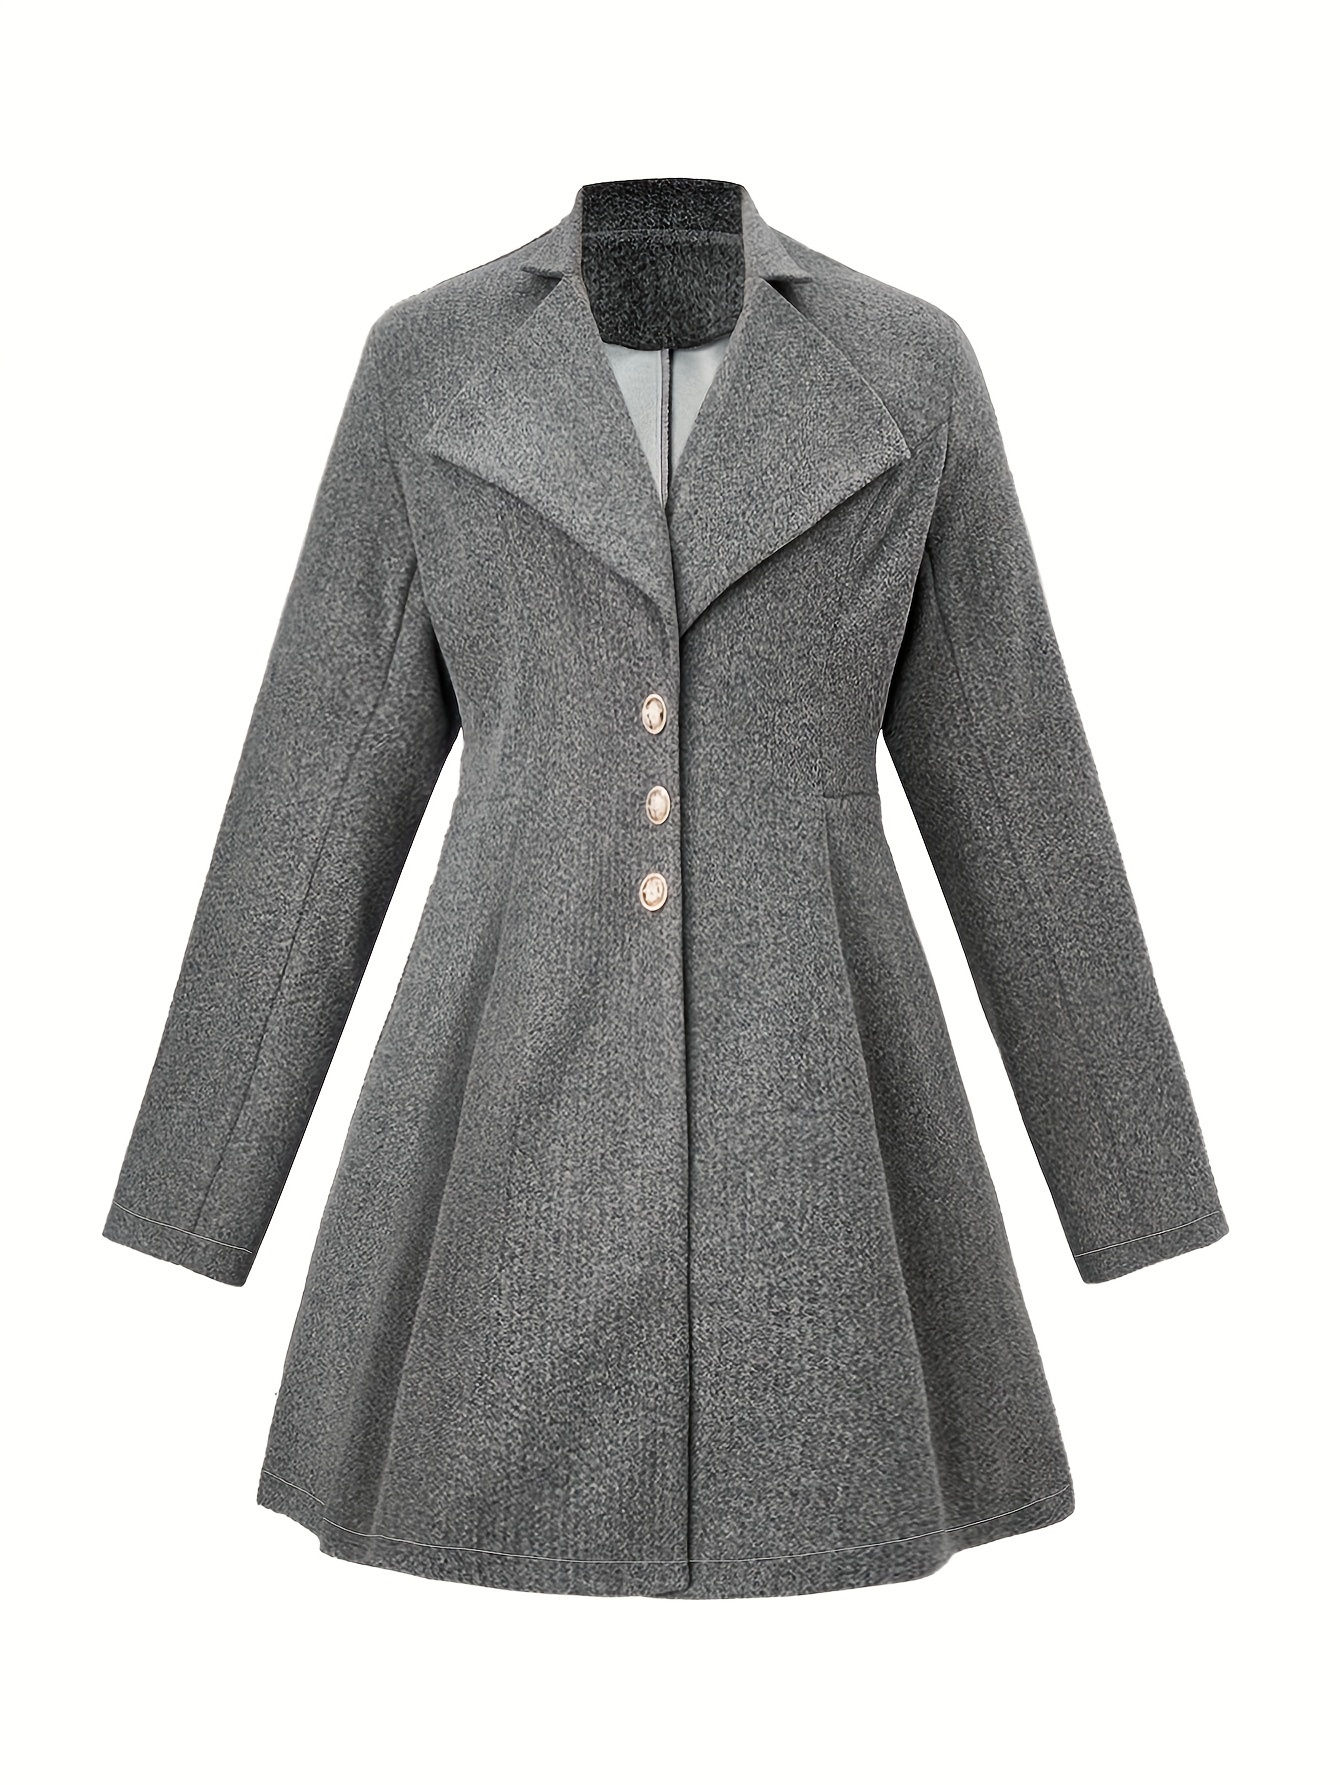 Wool Swing Coat Women, Winter Coat Plus Size, White Coat With